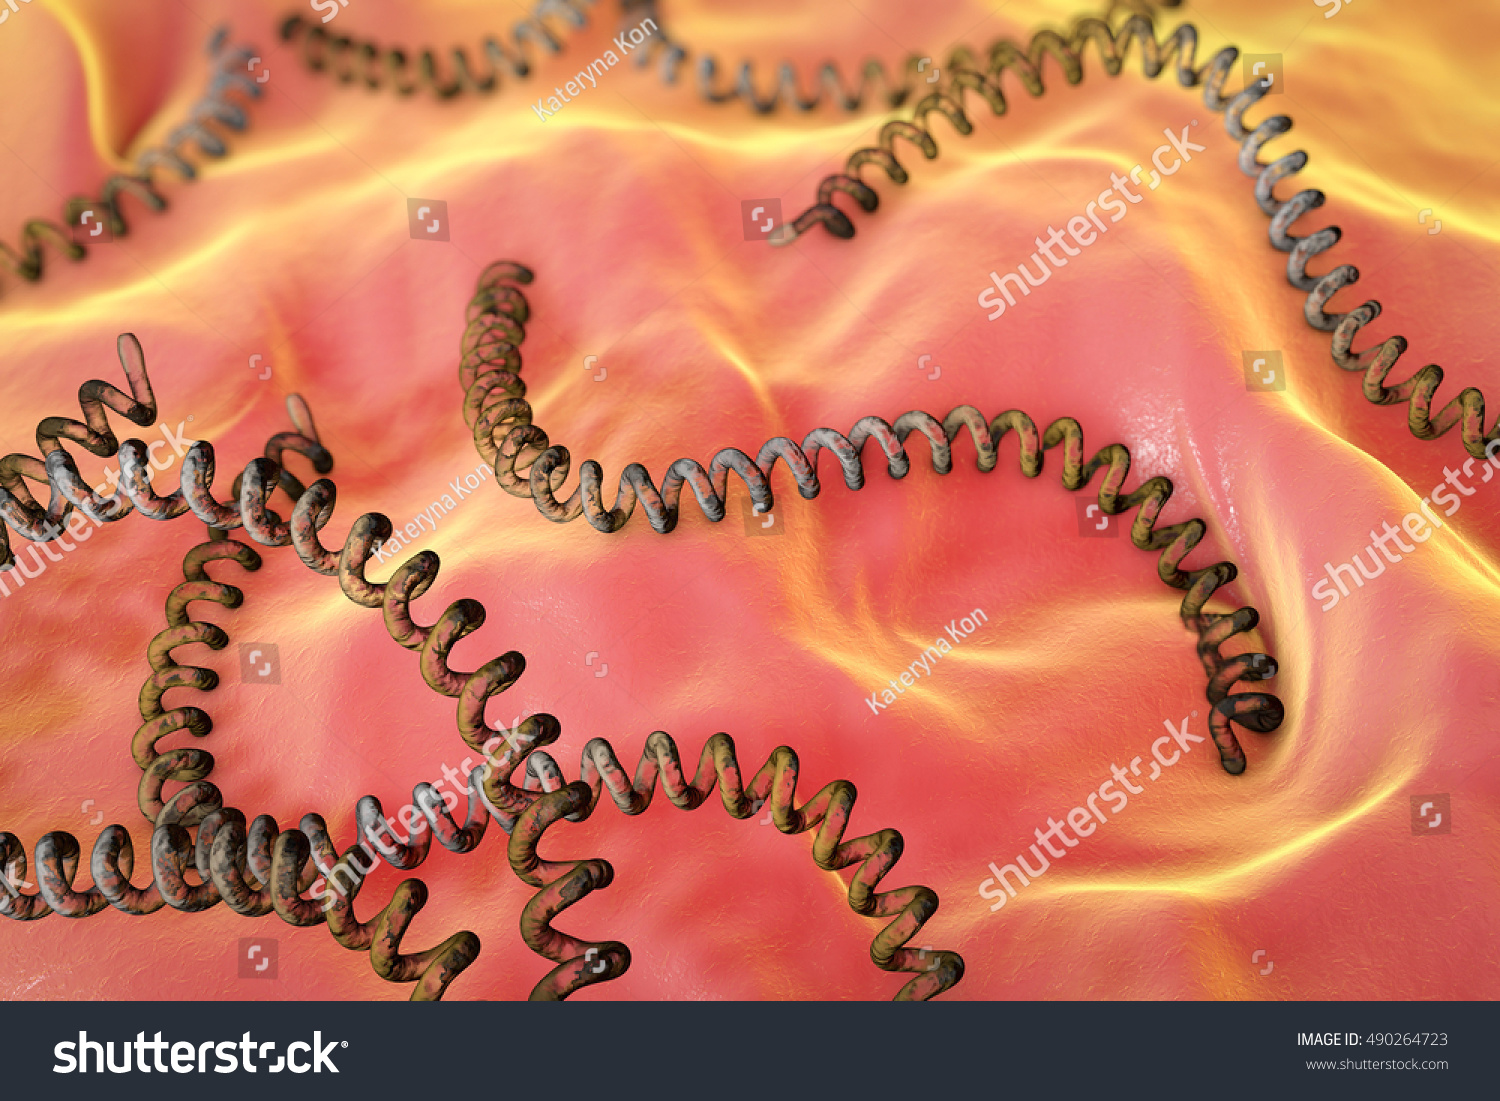 spiral bacteria